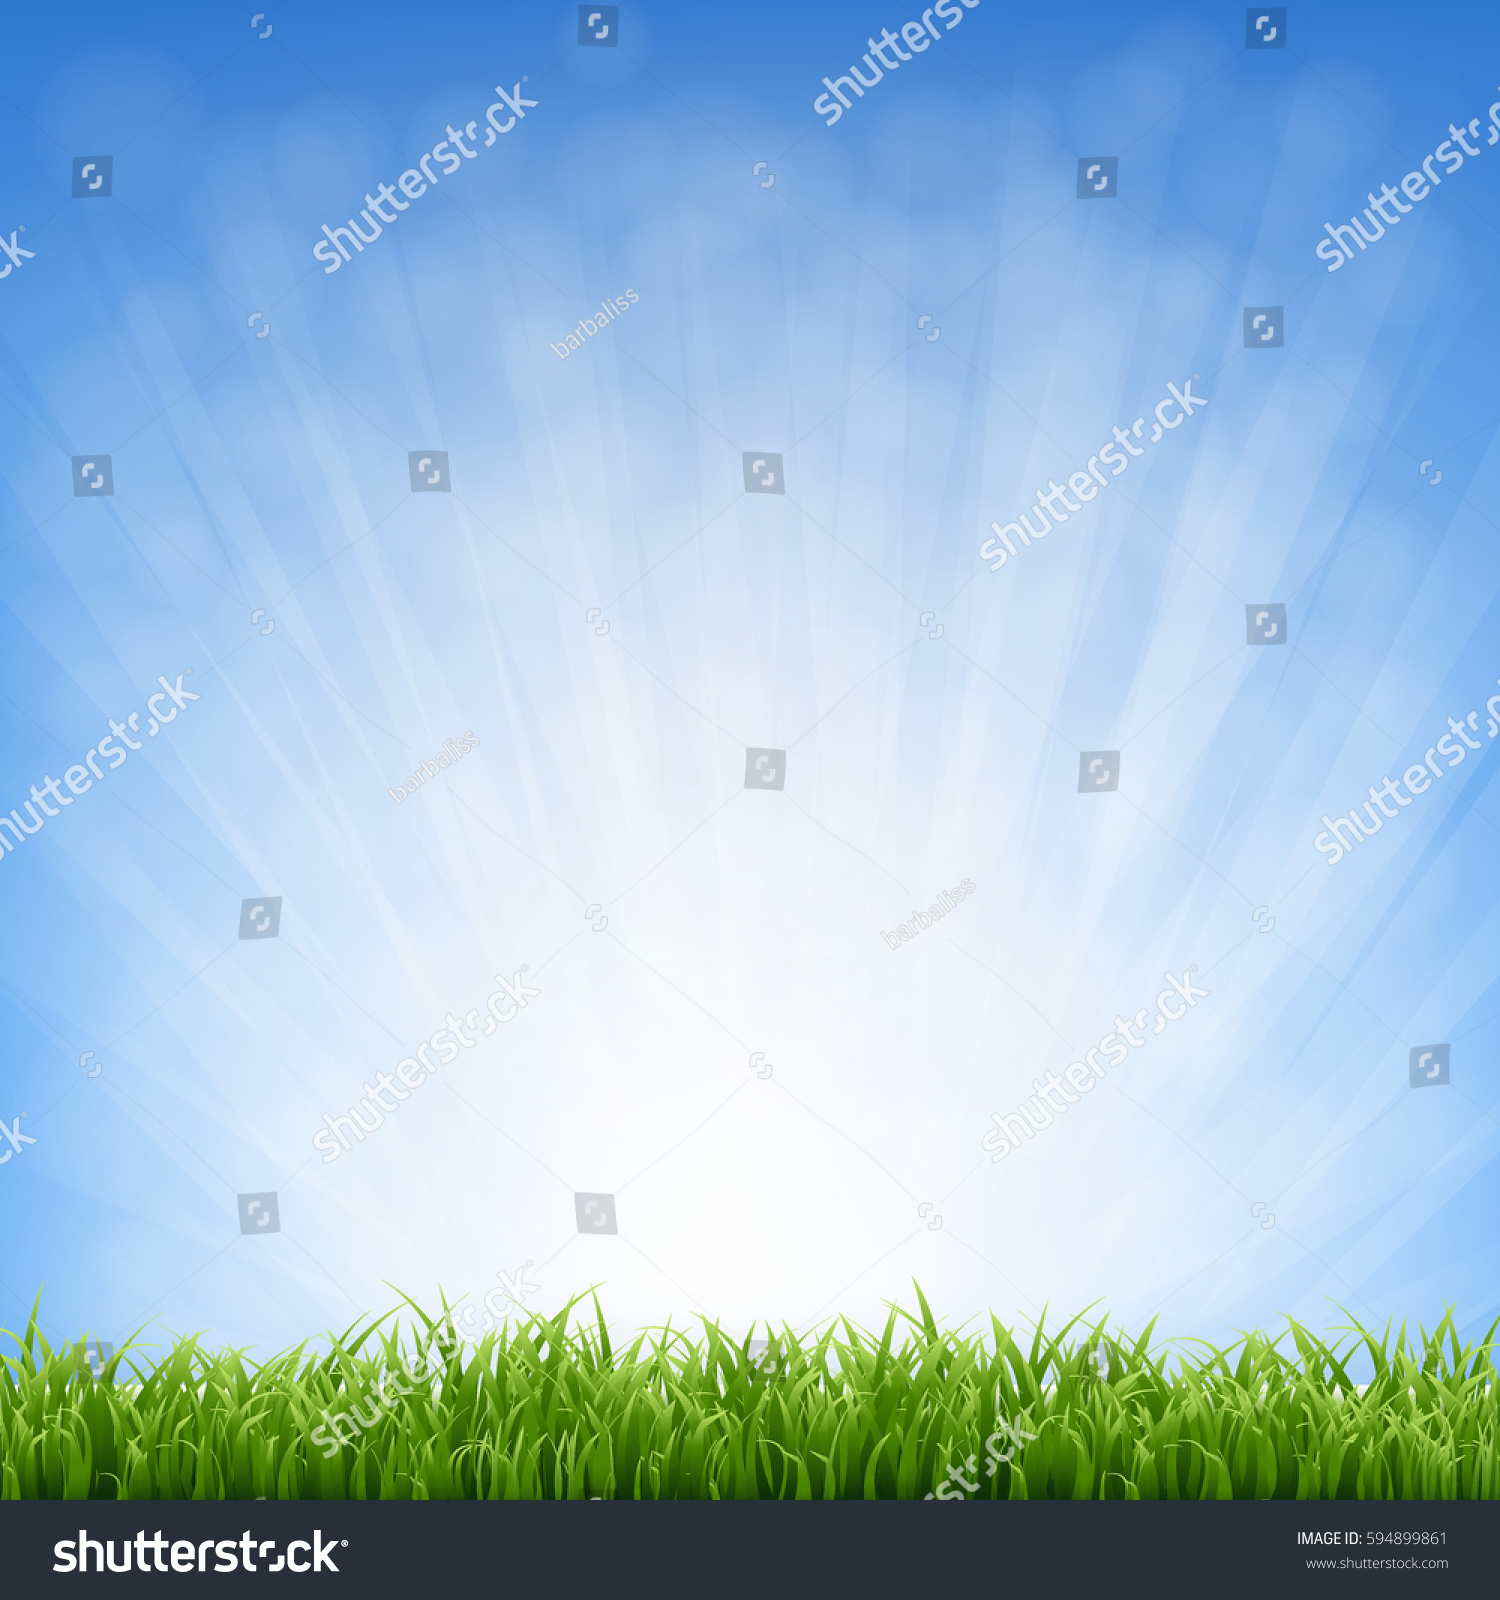 Grass Blue Sky Grass Border Stock Illustration 594899861 - Shutterstock